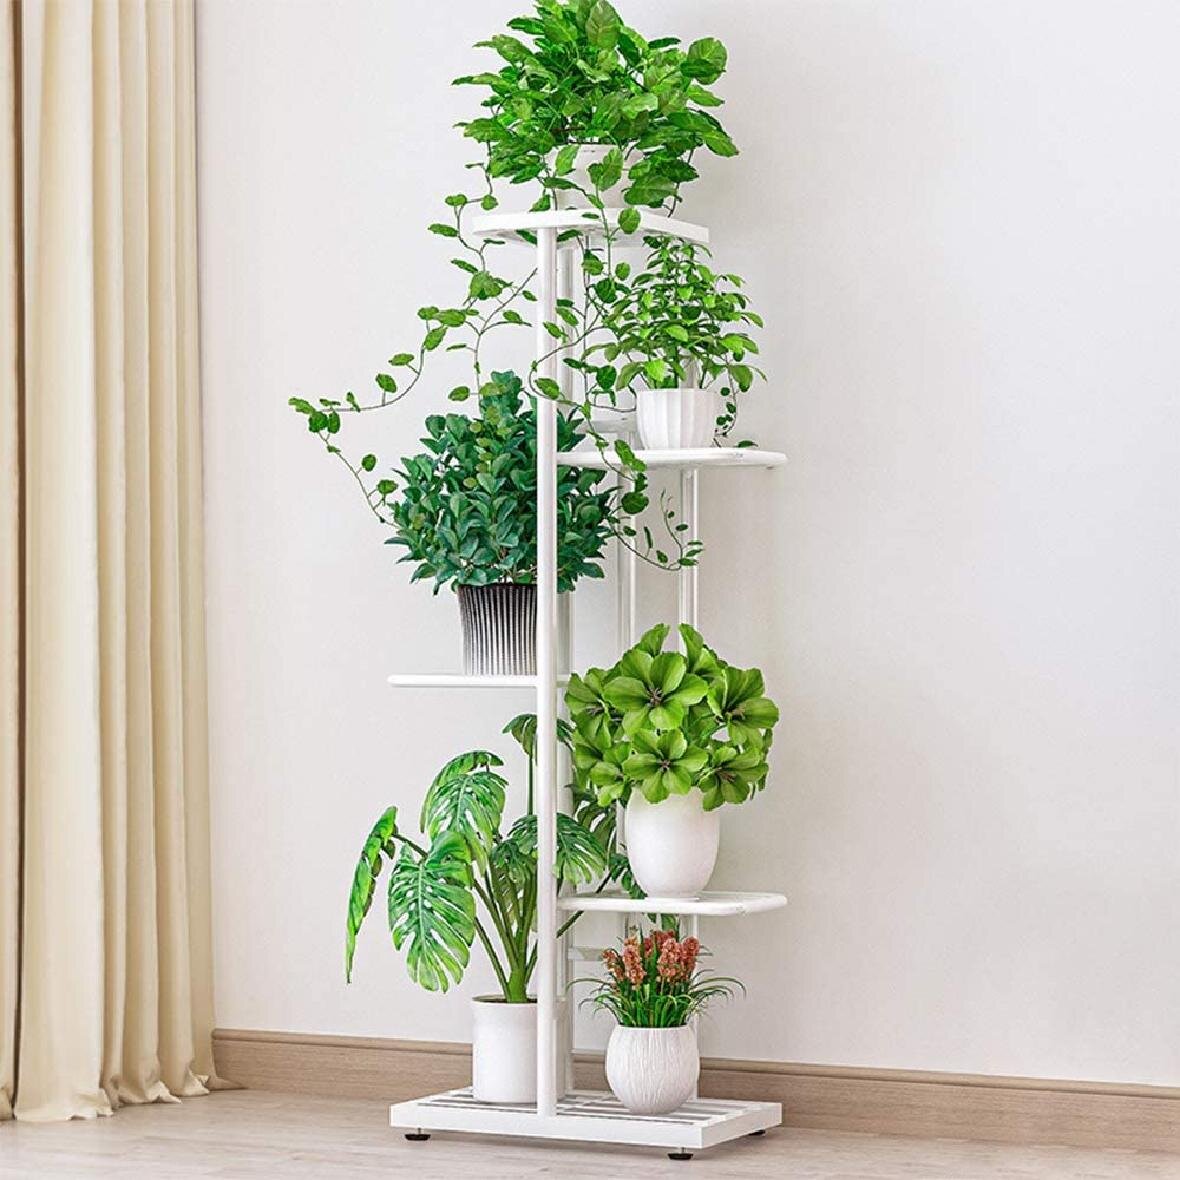 Adjustable Bamboo Plant Stand Indoor 3 Tier Tall Corner Flower Pots Rack Holder 